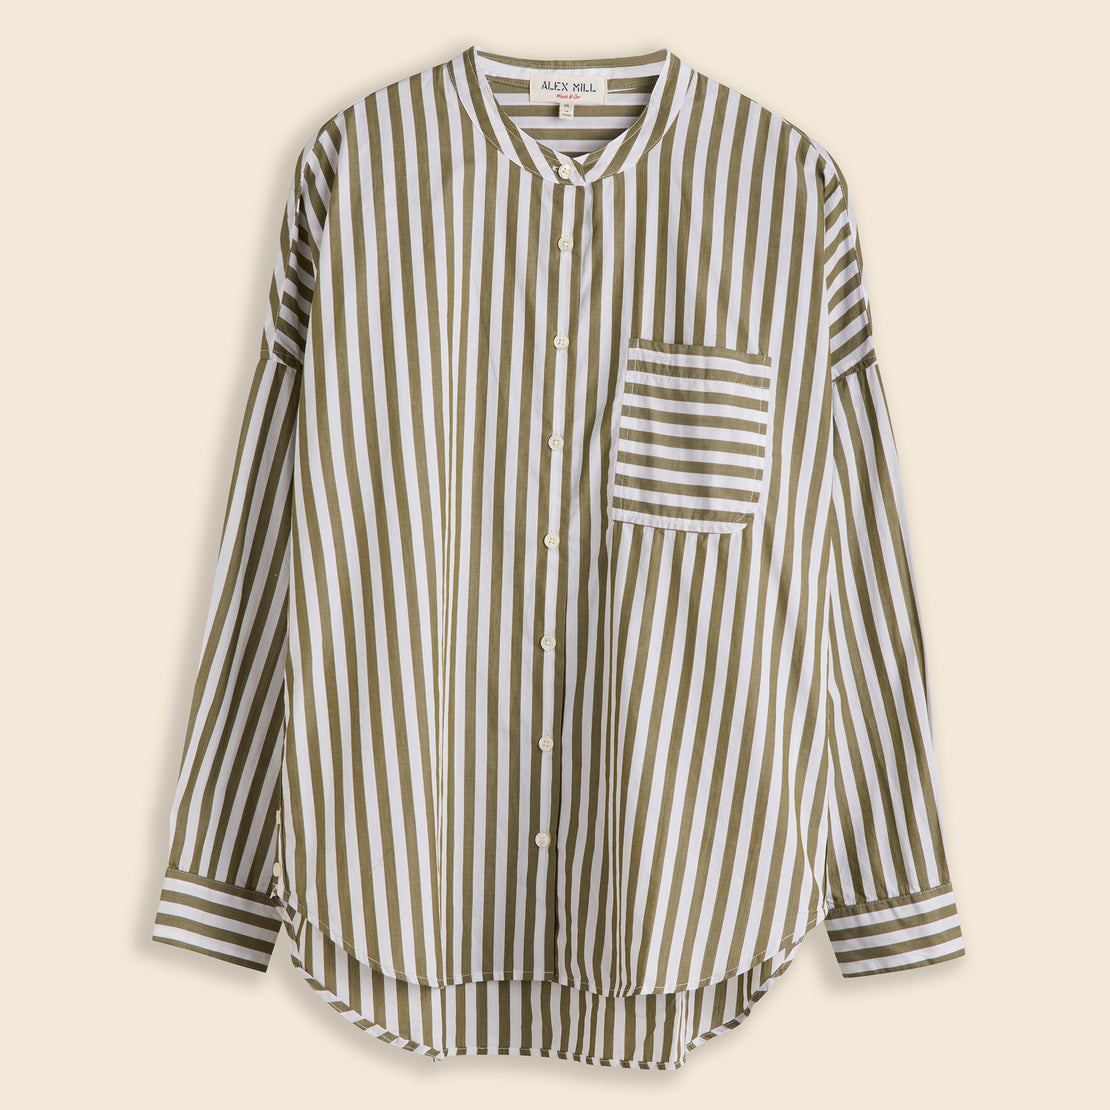 Alex Mill Collarless Standard Shirt in Wide Stripe - Olive/White